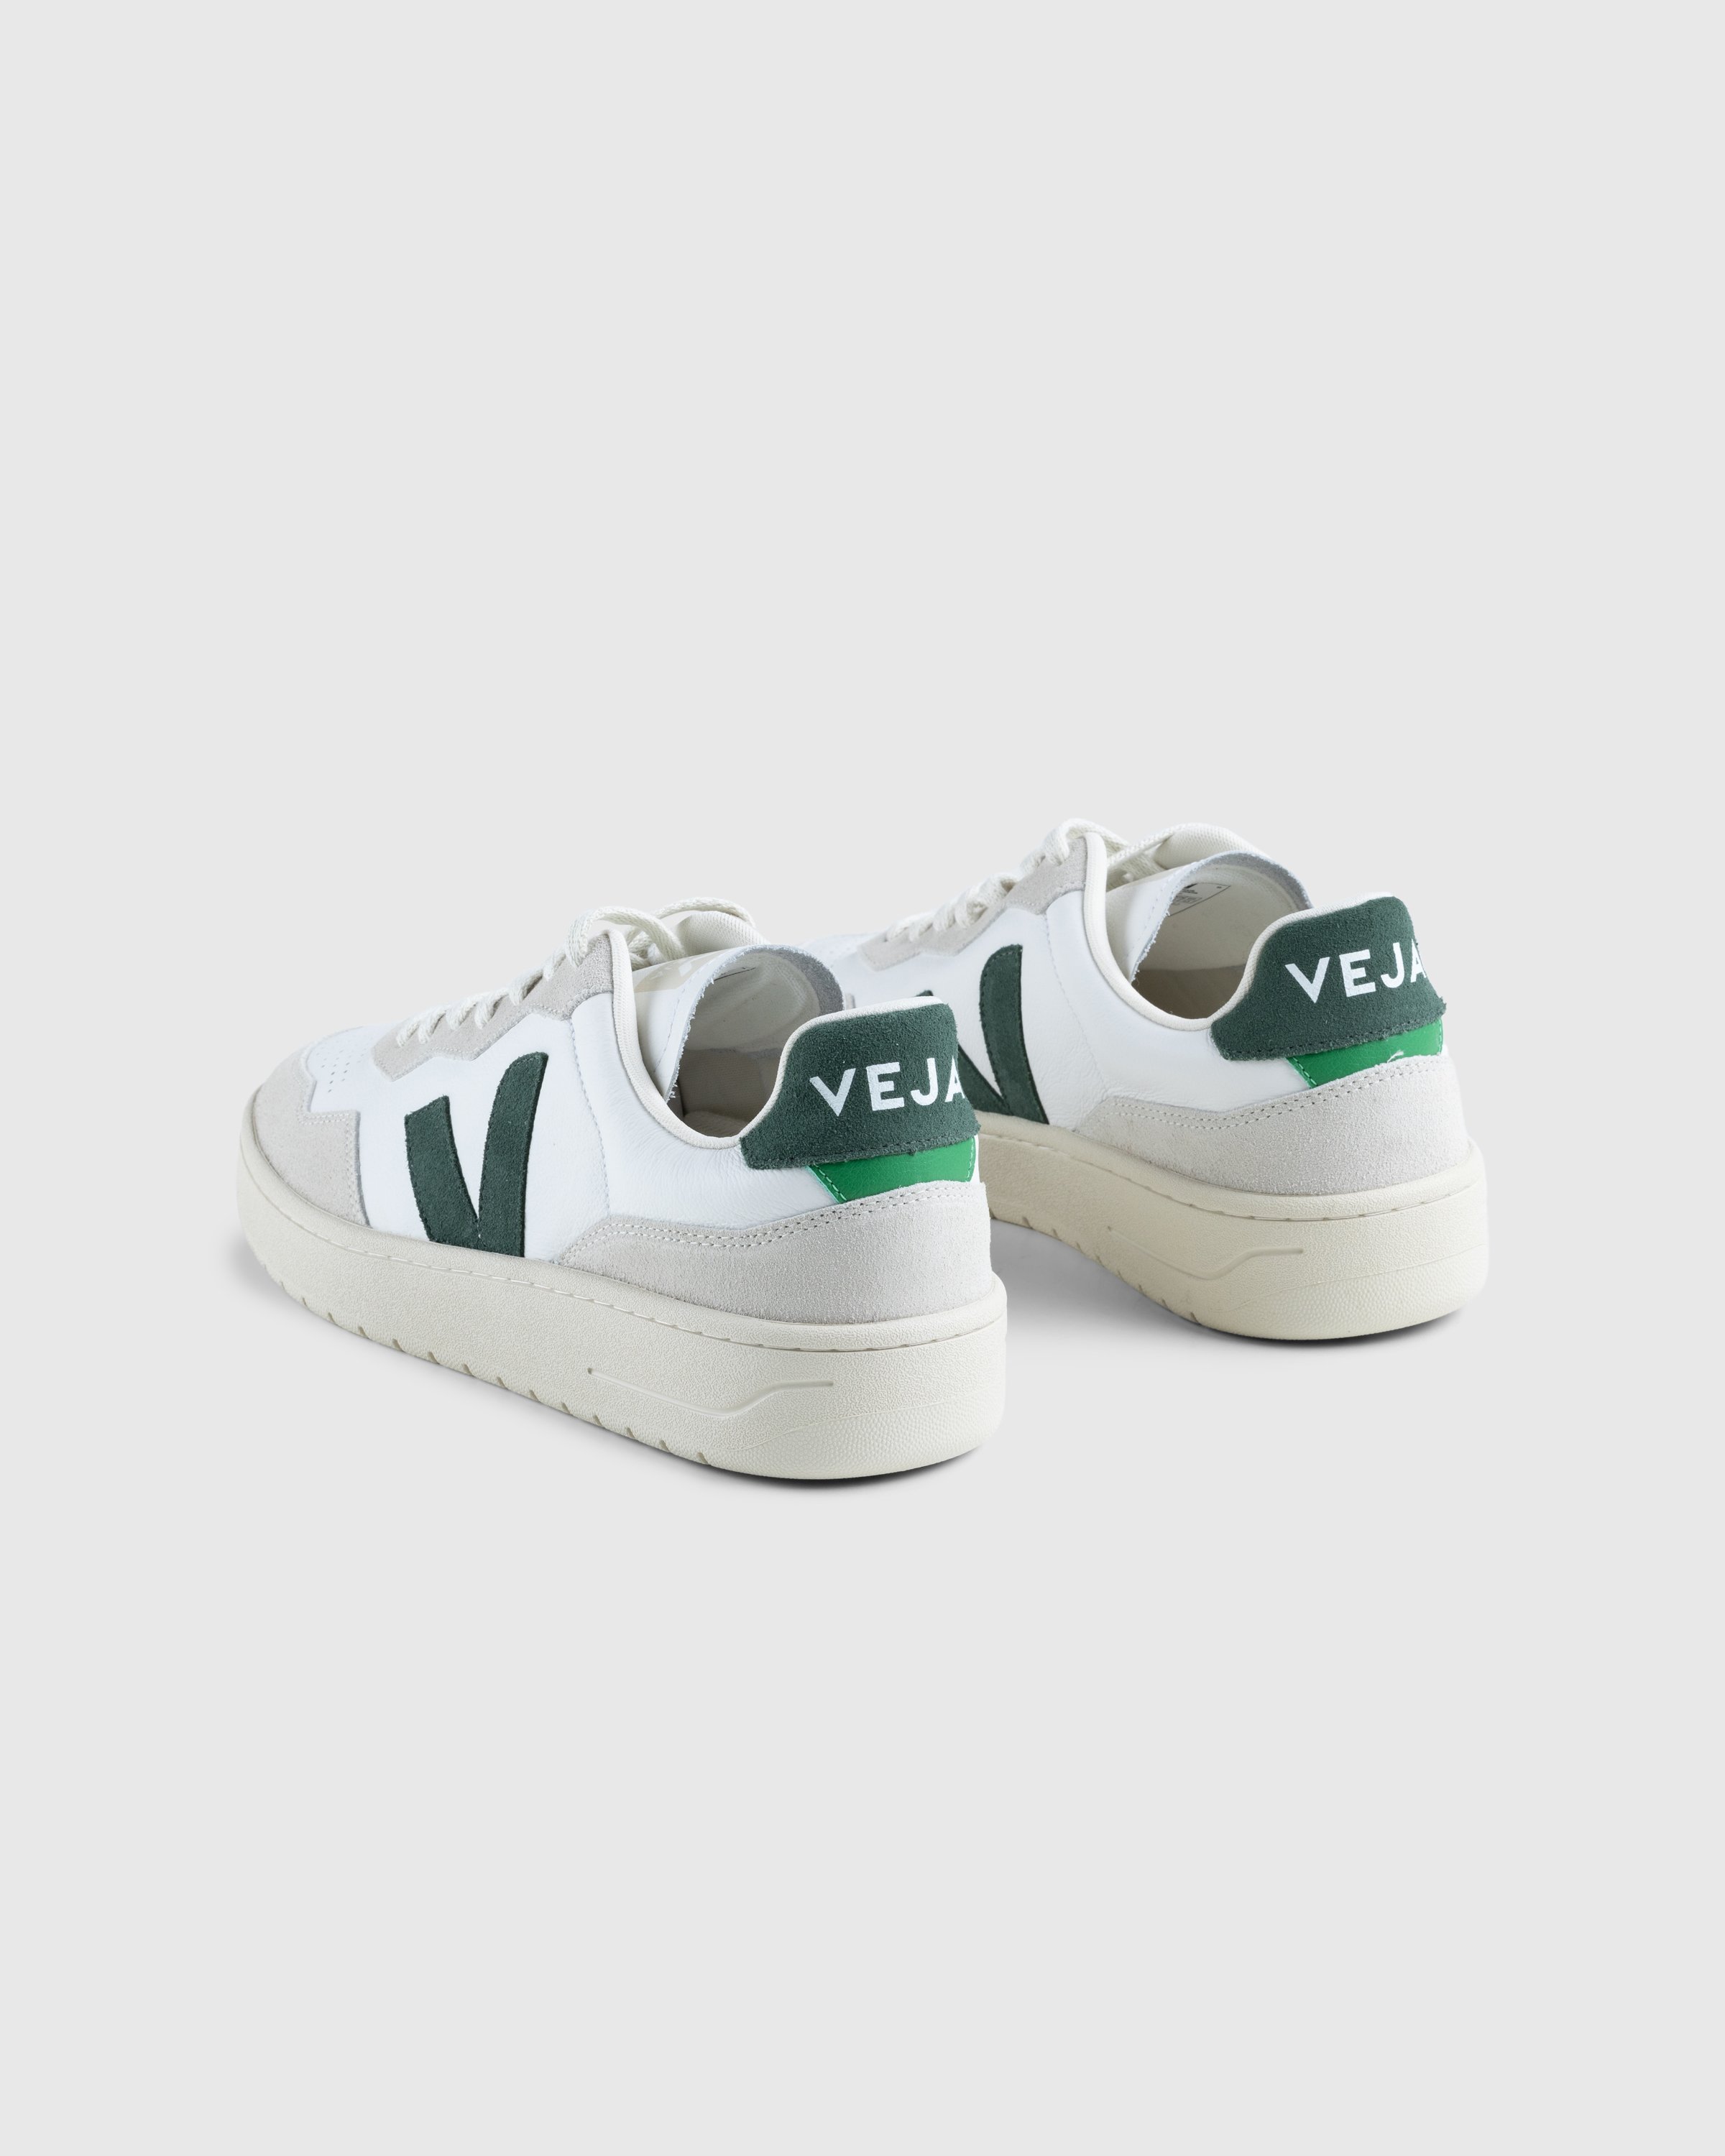 VEJA - V-90 Extra White - Footwear - Multi - Image 4